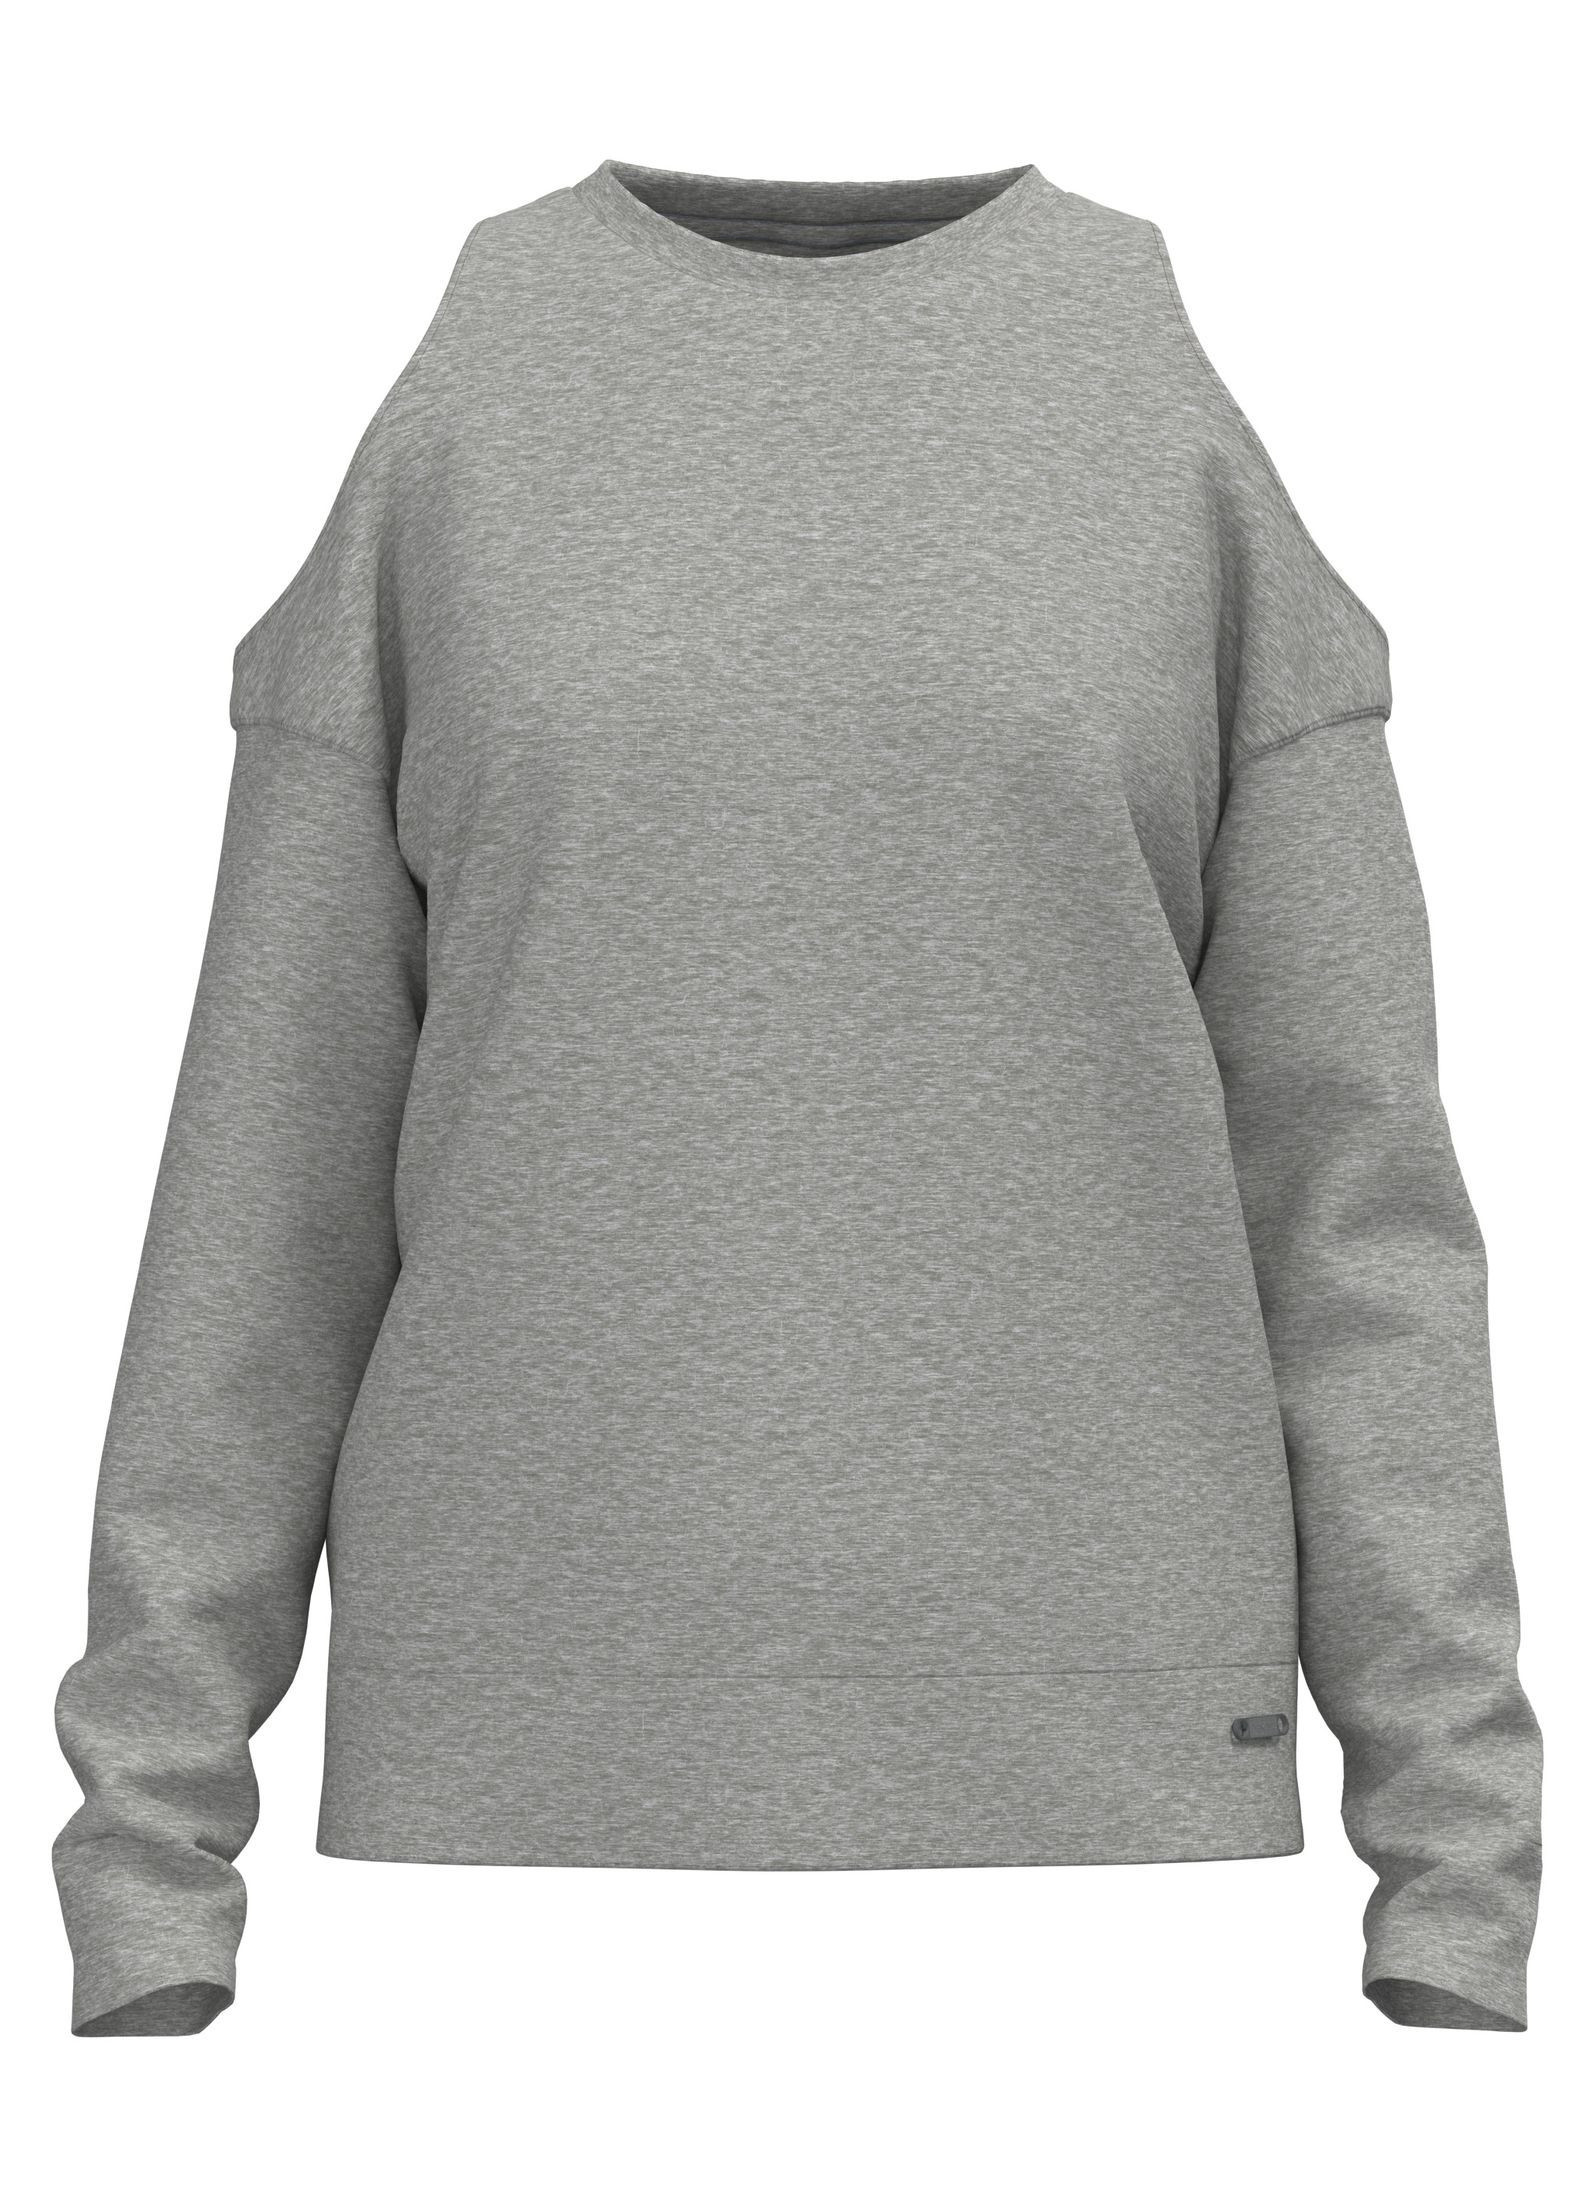 Sweatshirt, Grey, large image number 0